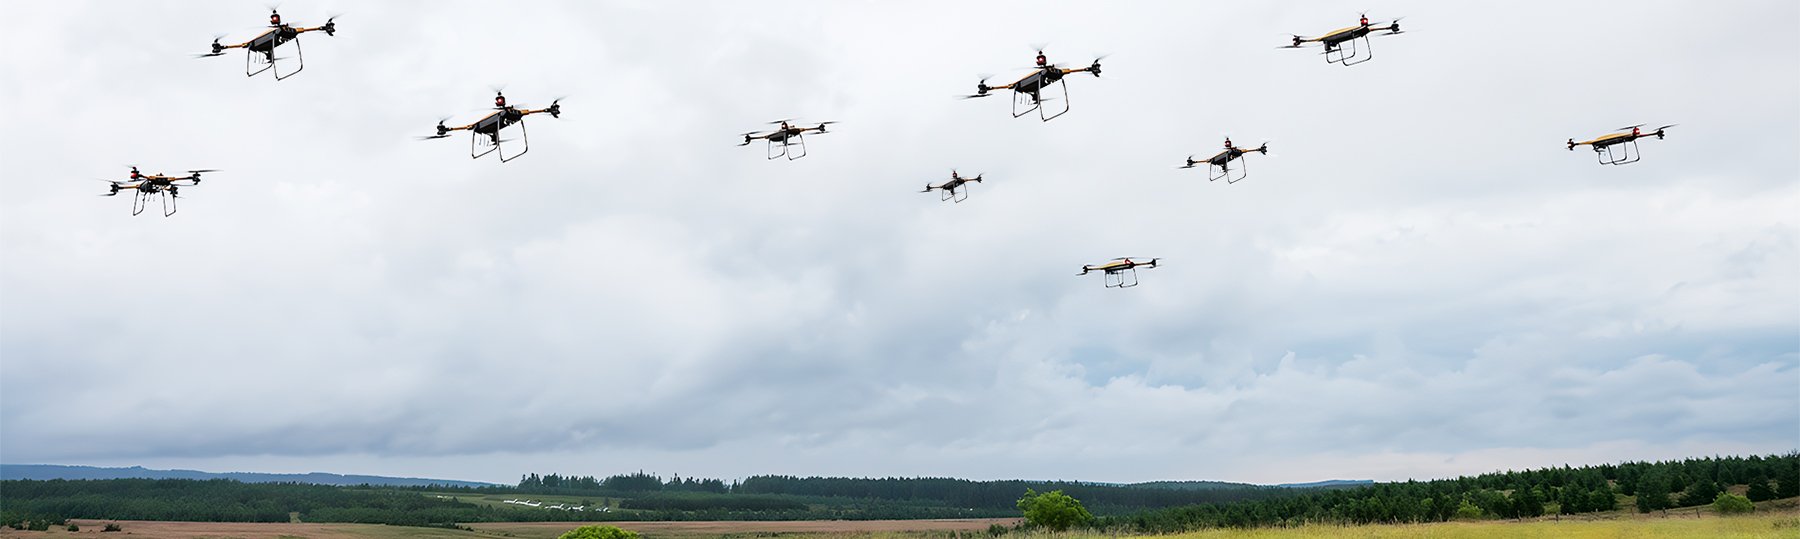 swarm drone communication